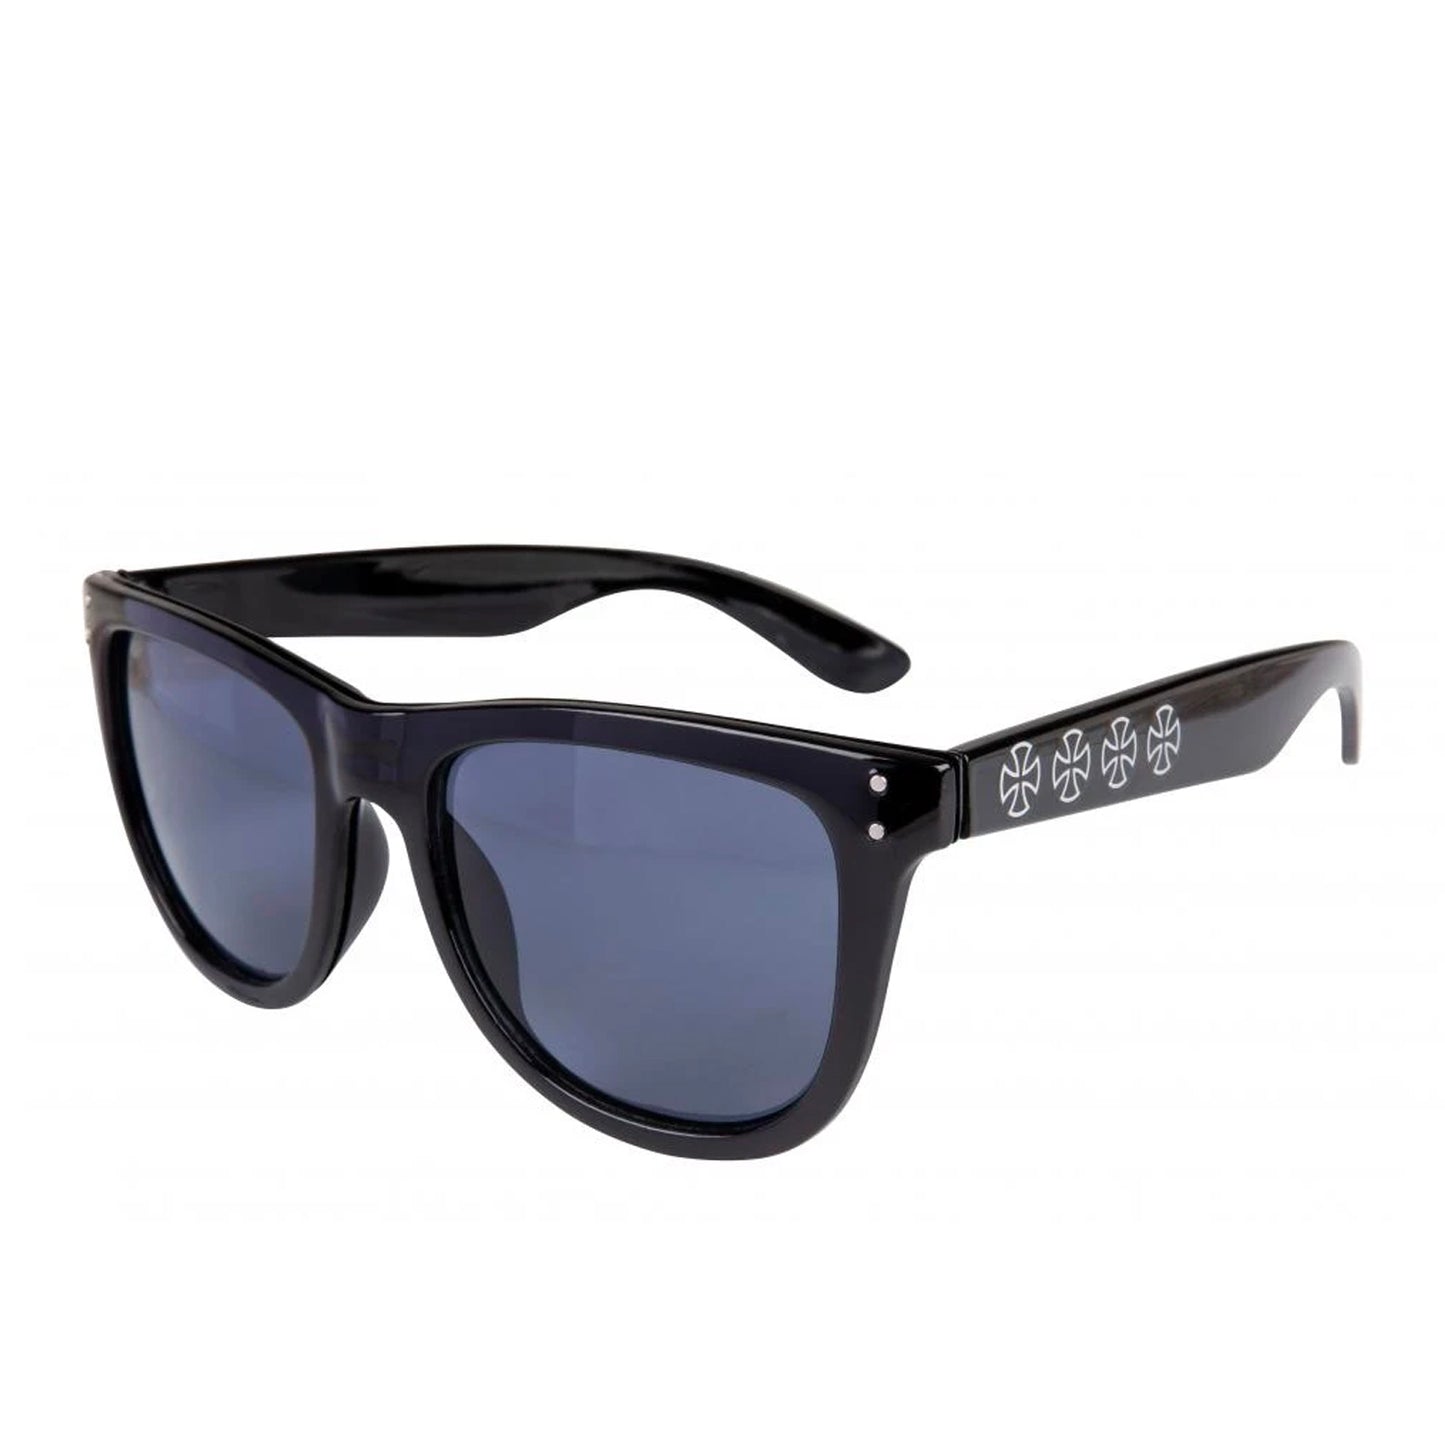 Independent Manner Sunglasses - Black - Prime Delux Store